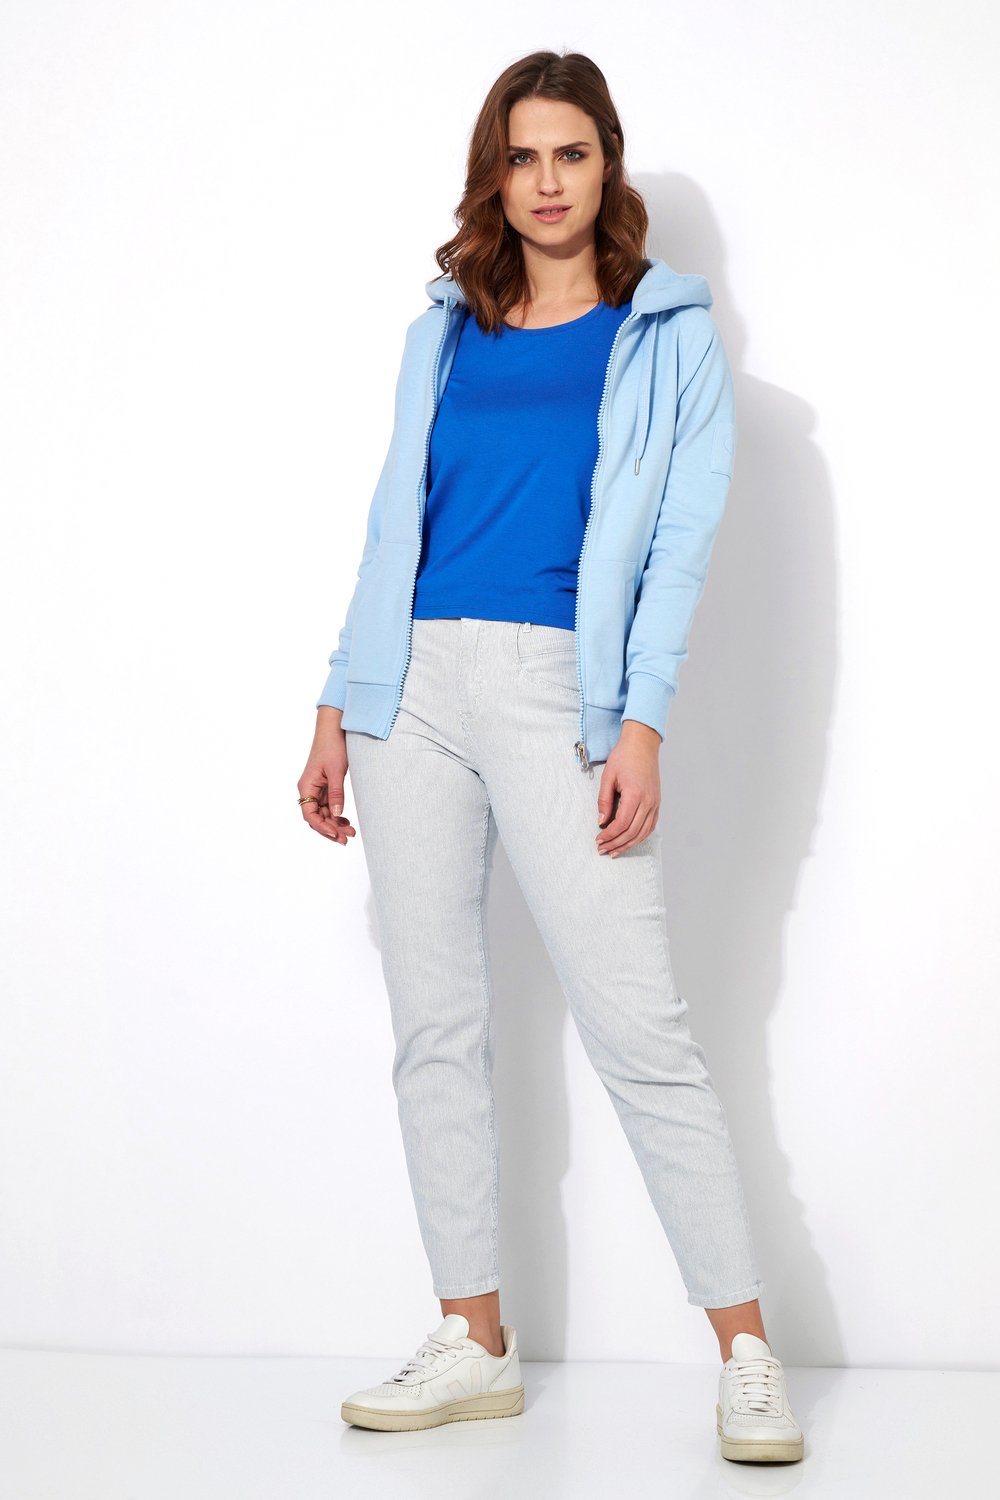 Lässige, gestreifte Jeans | Style »Happy« white/blue